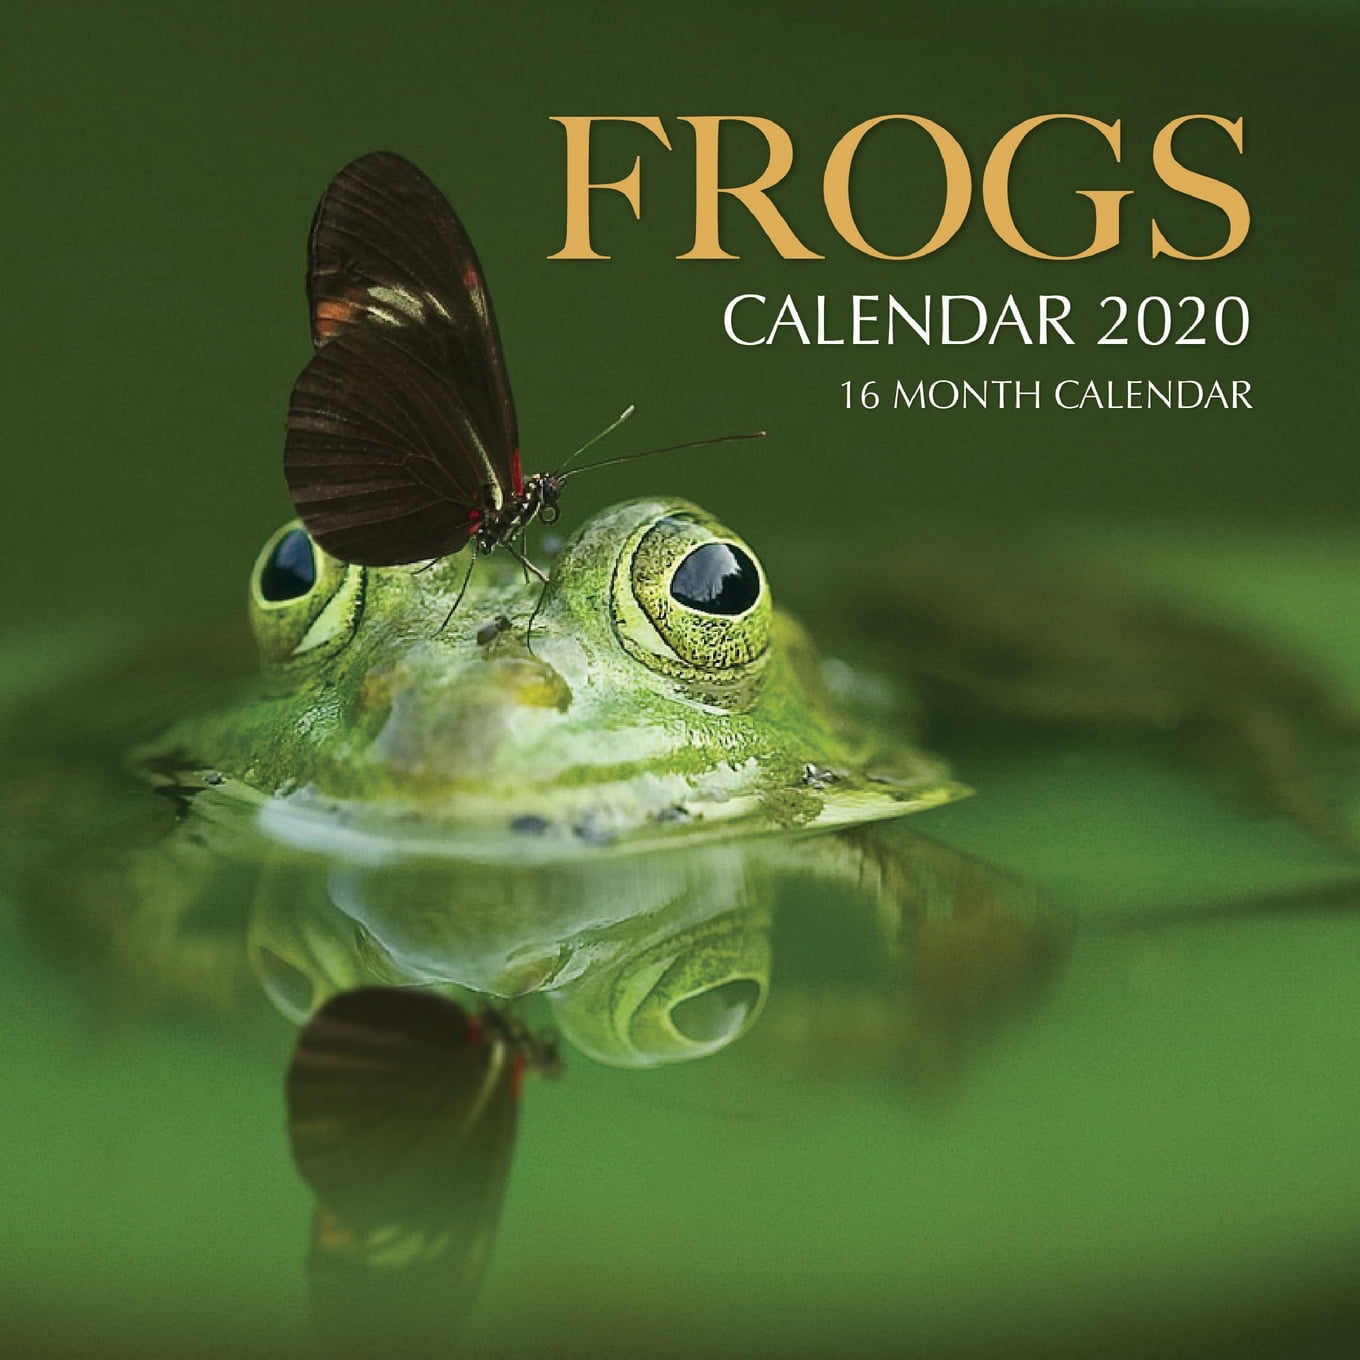 Frogs Calendar 2020 16 Month Calendar (Paperback)